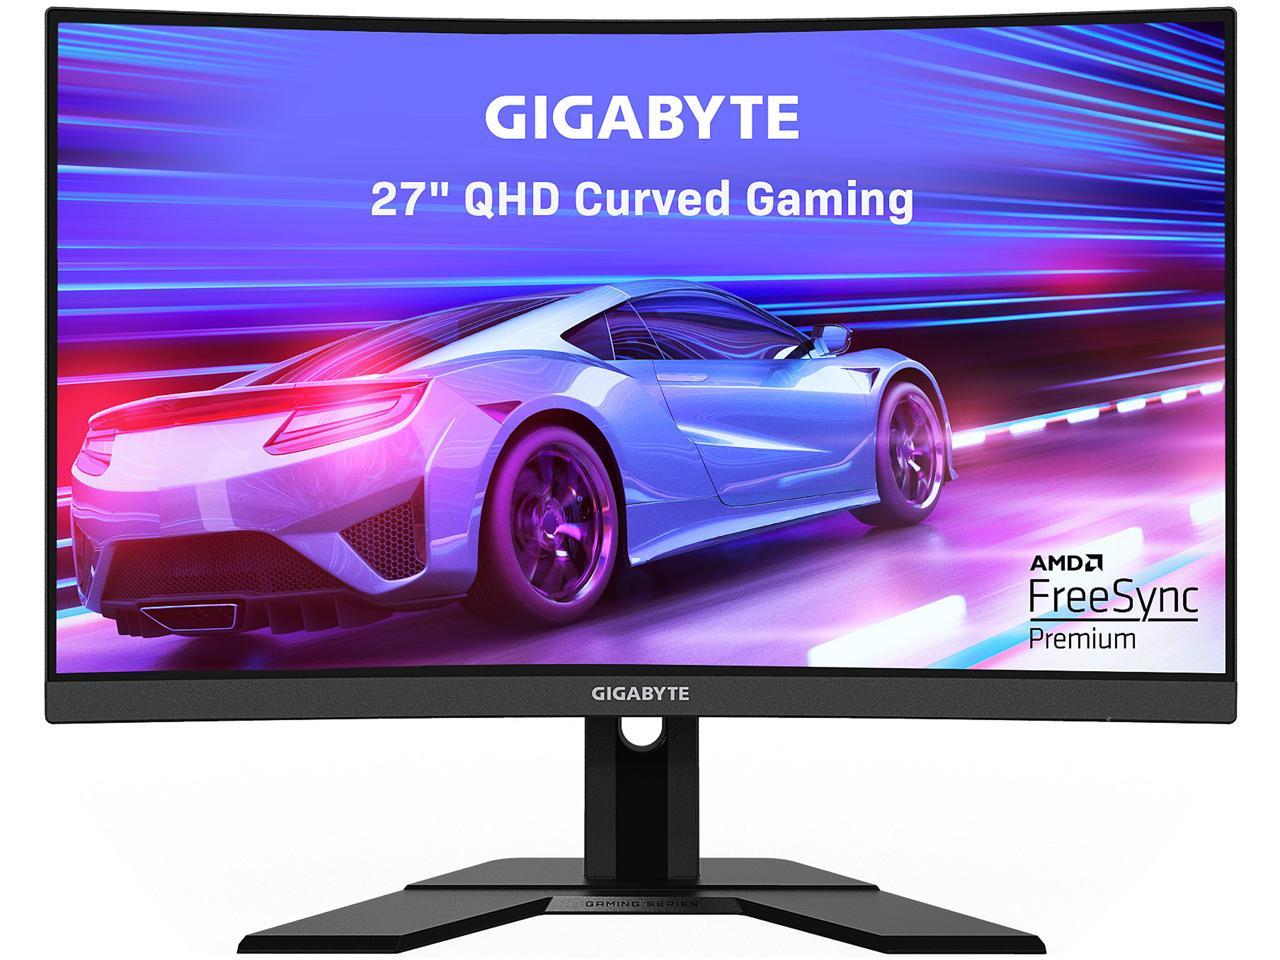 GIGABYTE G27QC 27" 165Hz 1440P Curved Gaming Monitor, 2560 x 1440 VA 1500R Display, 1ms (MPRT) Response Time, 92% DCI-P3, HDR Ready, FreeSync Premium, 1x Display Port 1.4, 2x HDMI 2.0, 2x USB 3.0